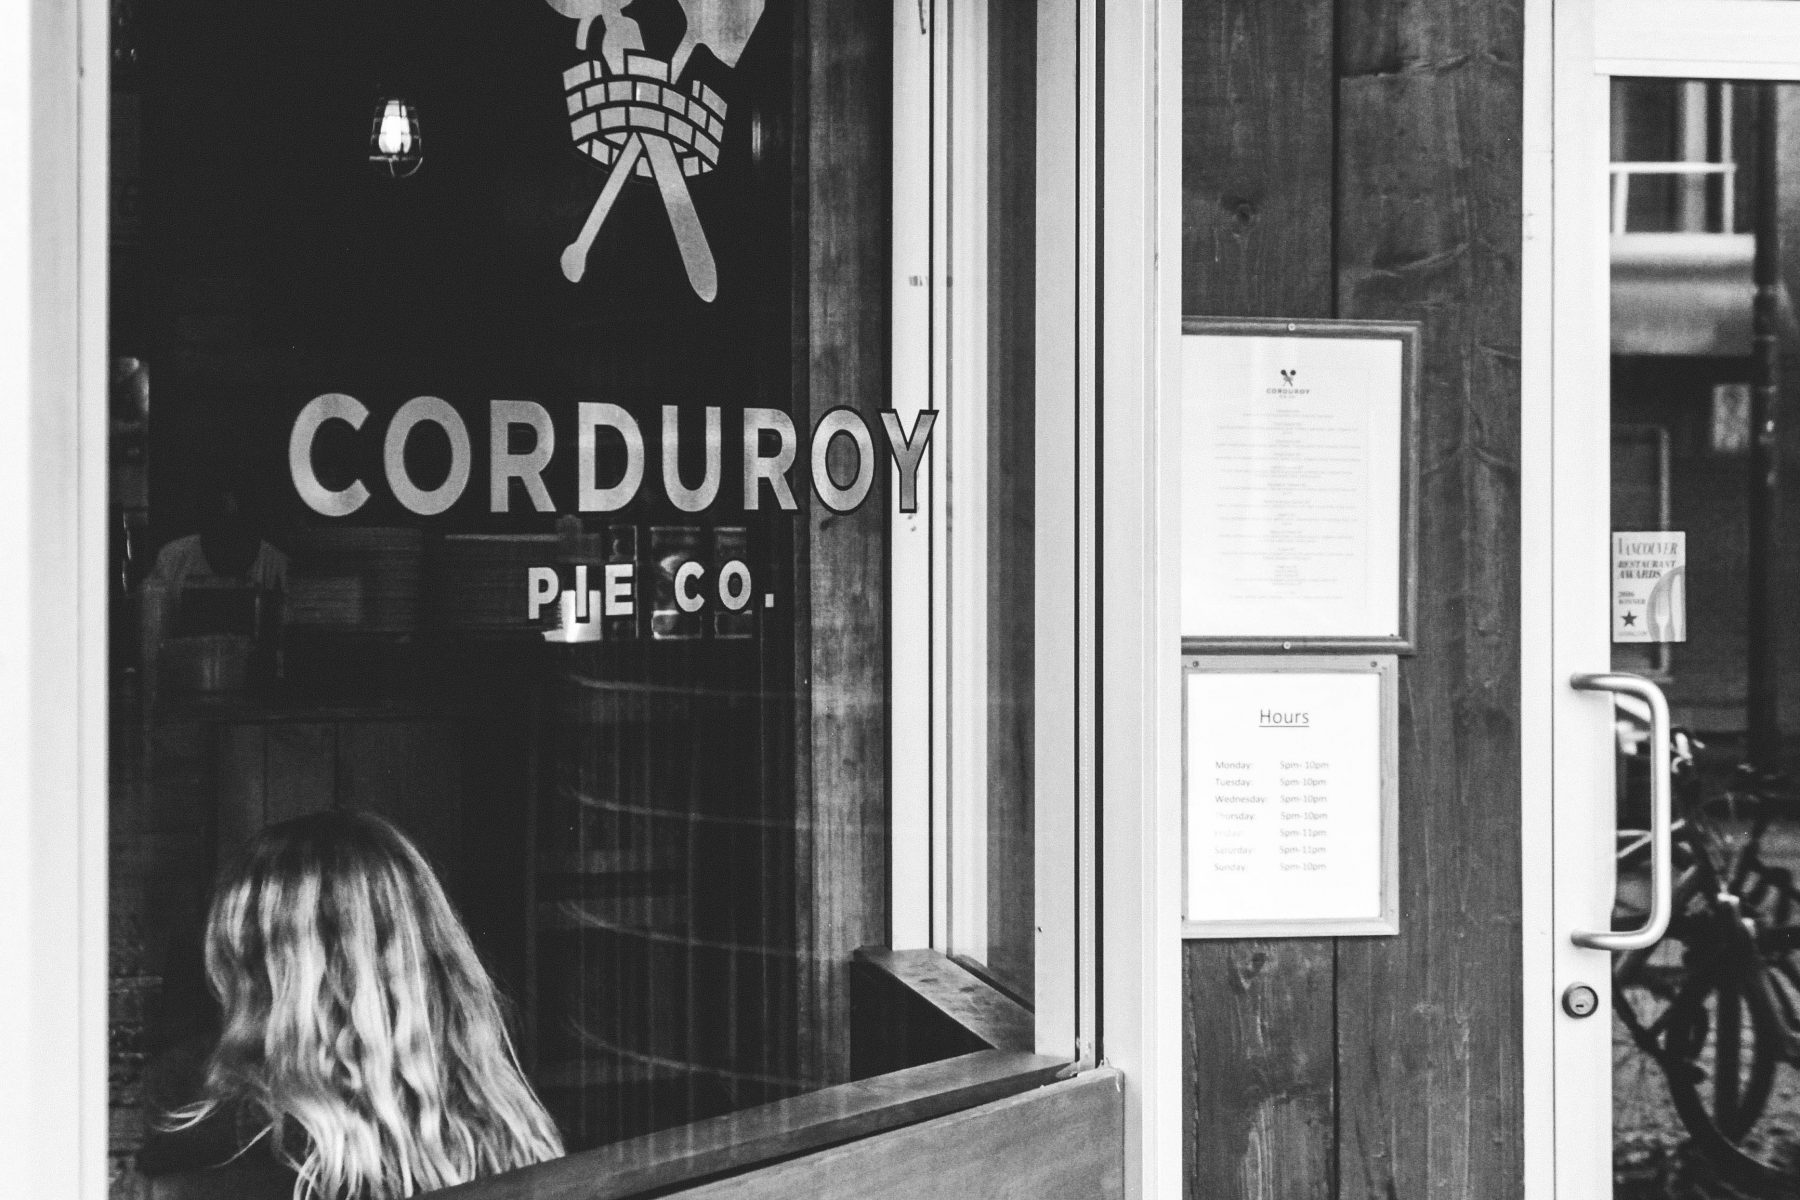 B33R COMMUNITY – Corduroy Pie Company